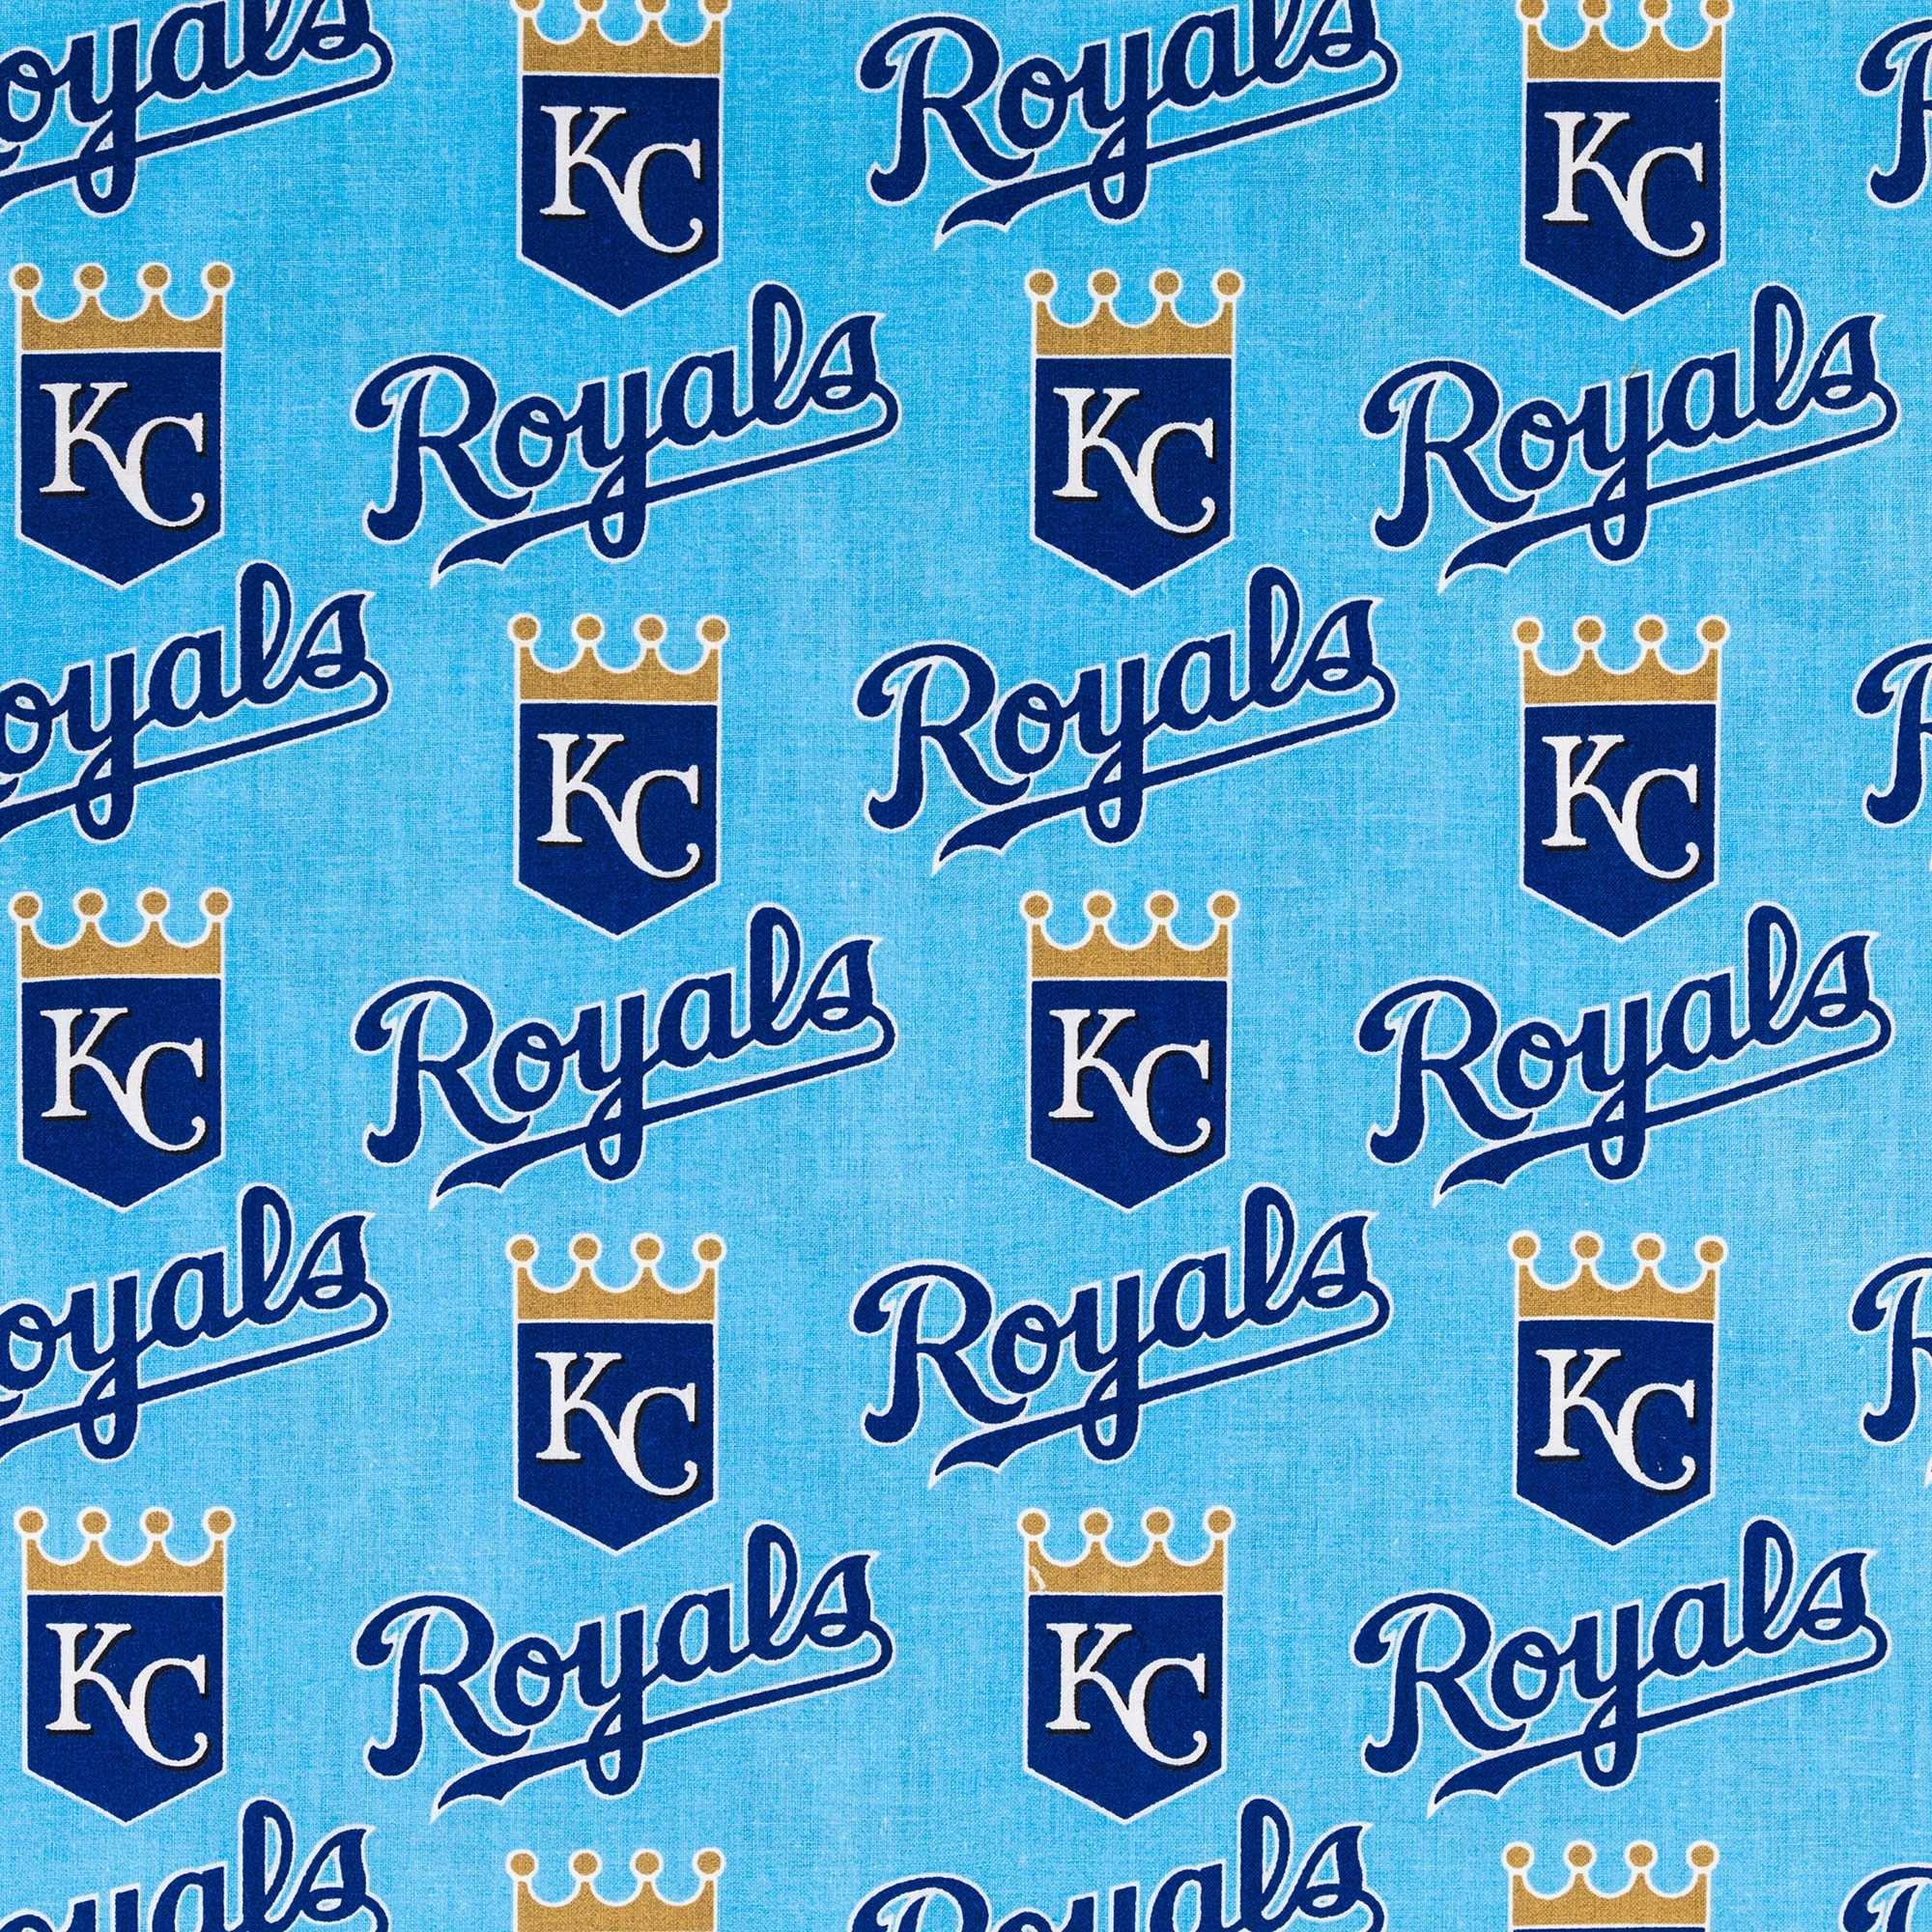 MLB Kansas City Royals Cotton Fabric